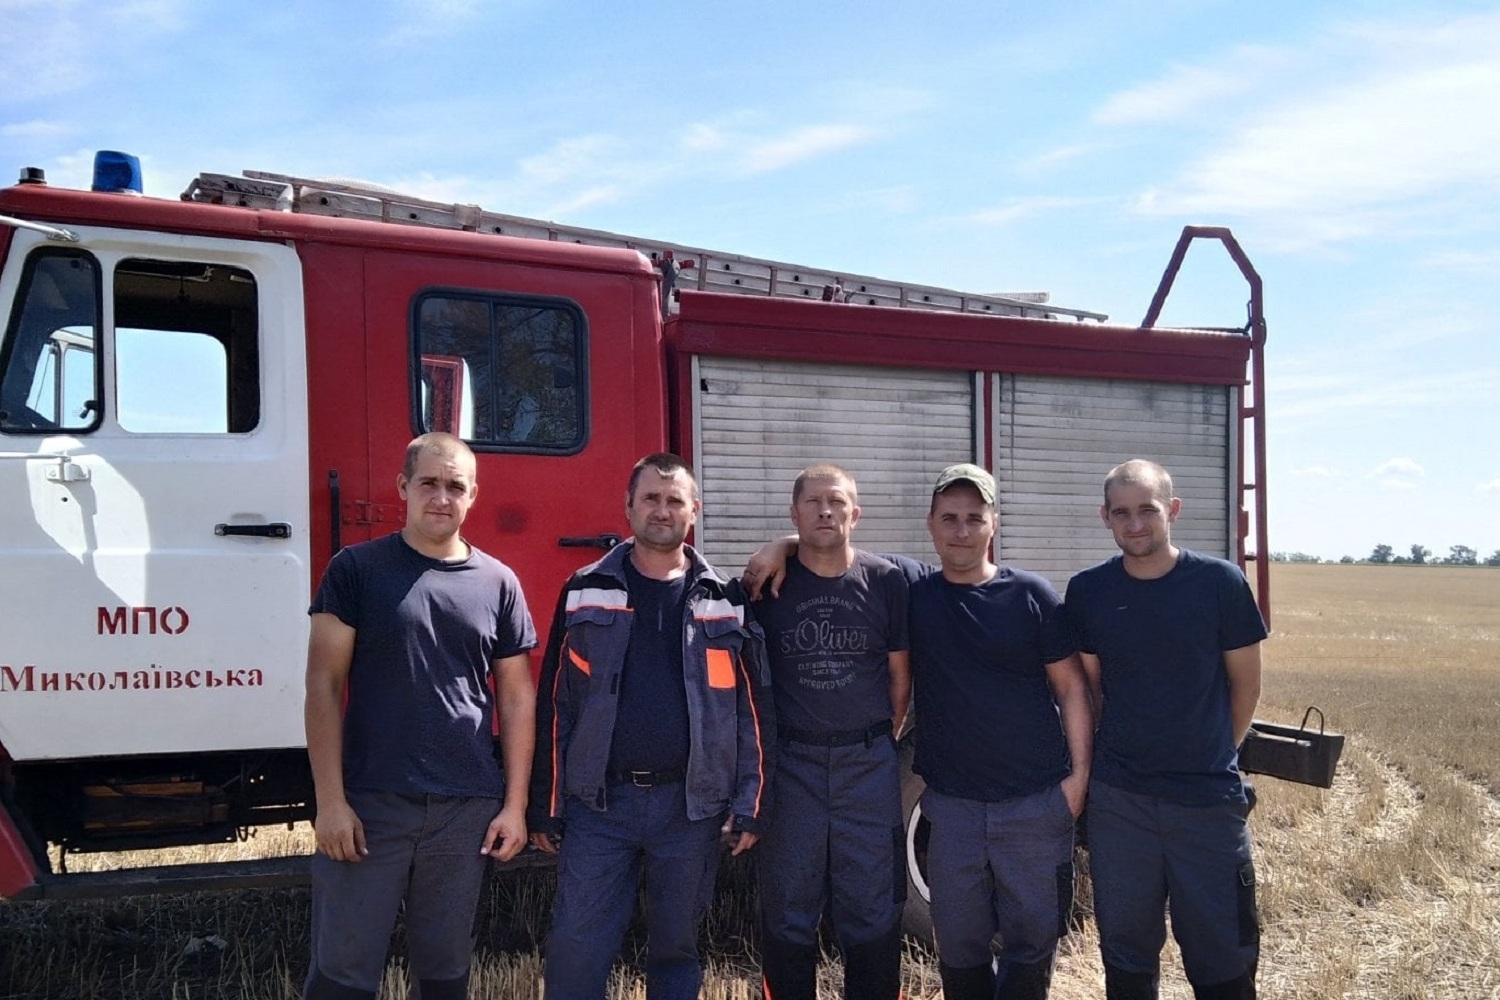 Fire brigades strengthen the capacity of municipalities